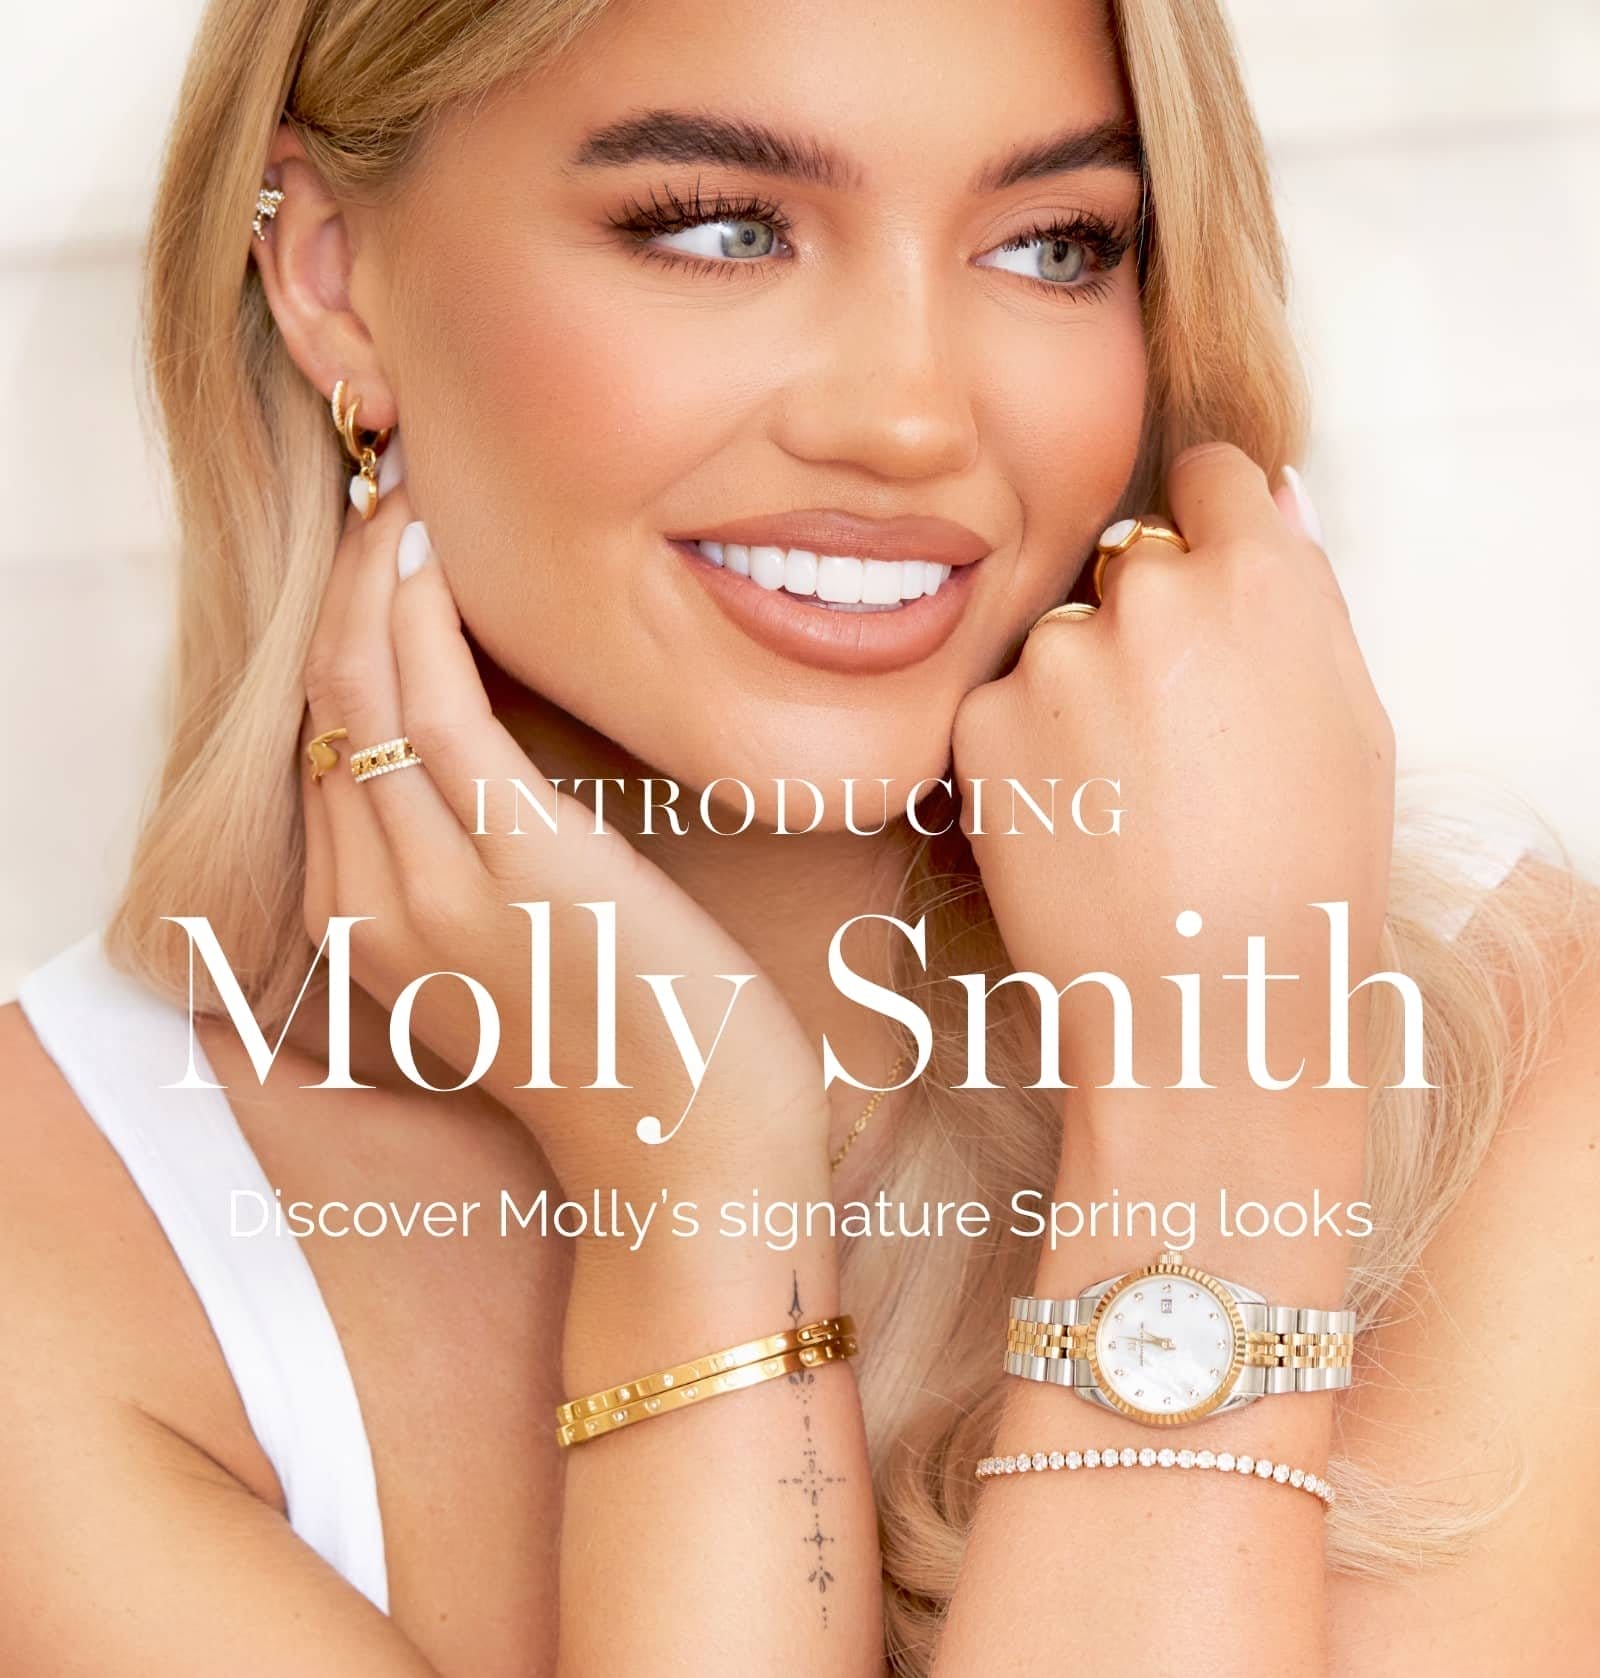 Introducing Molly Smith